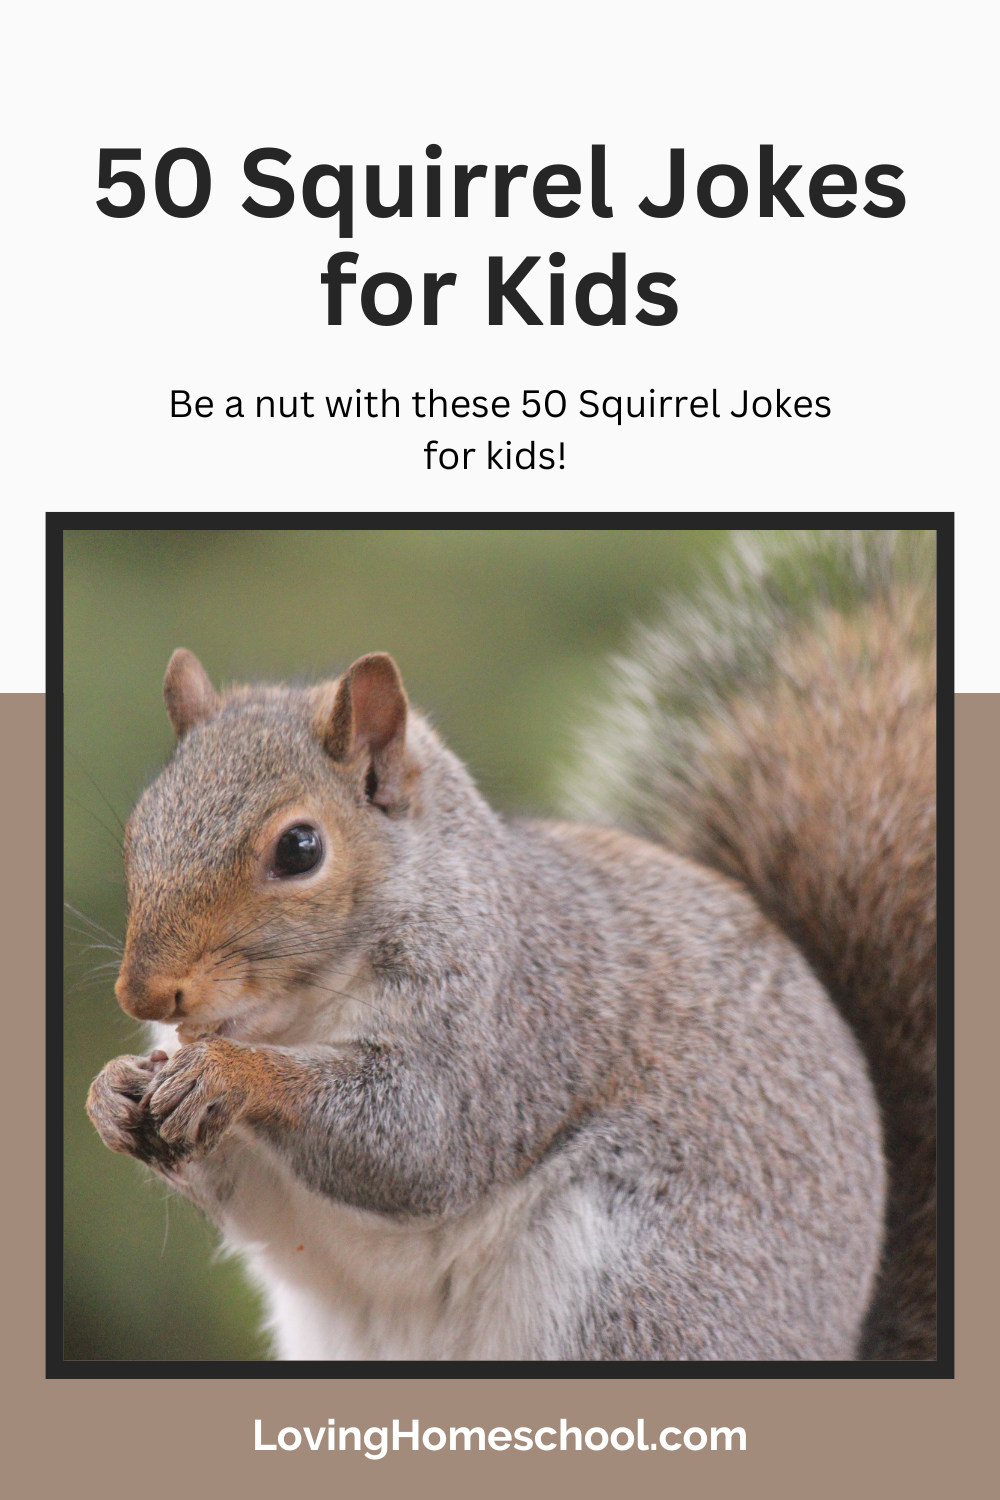 50 Squirrel Jokes for Kids Pinterest Pin